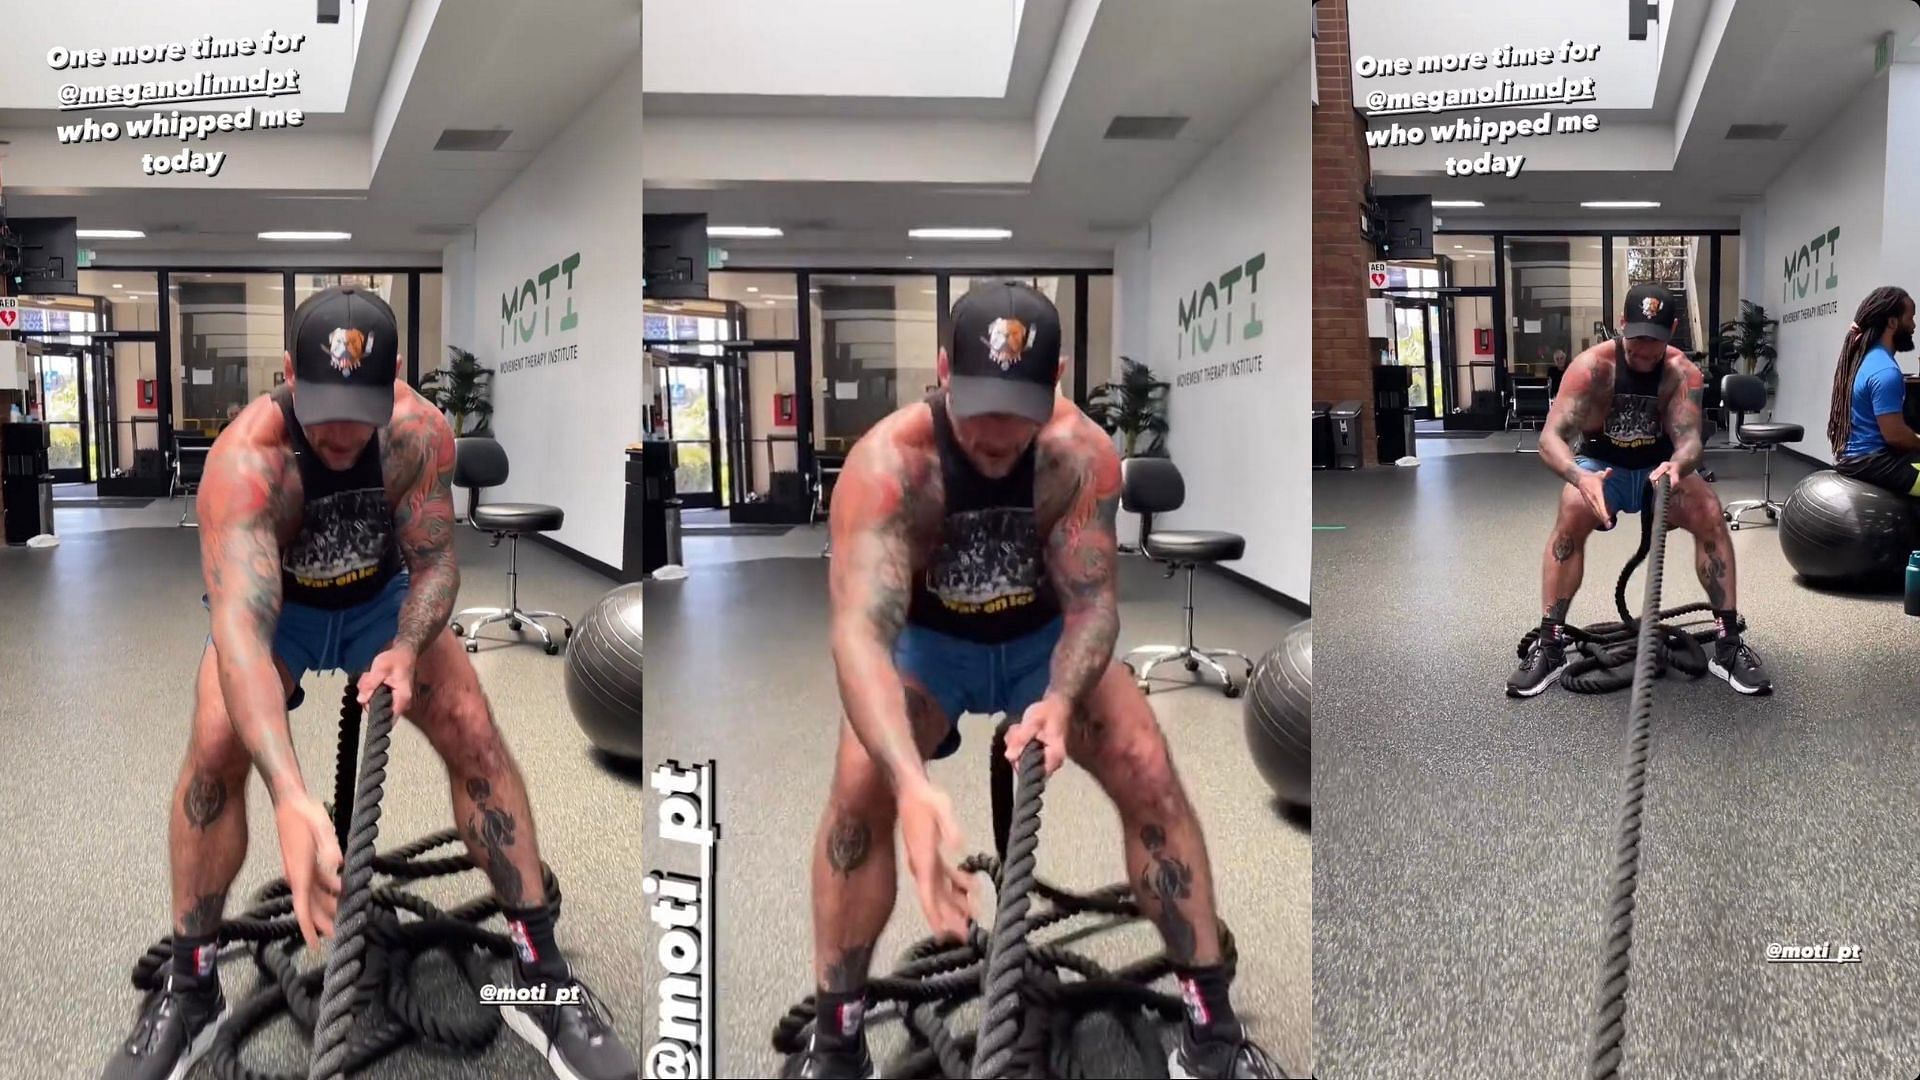 CM Punk at the gym (source: @cmpunk on Instagram)